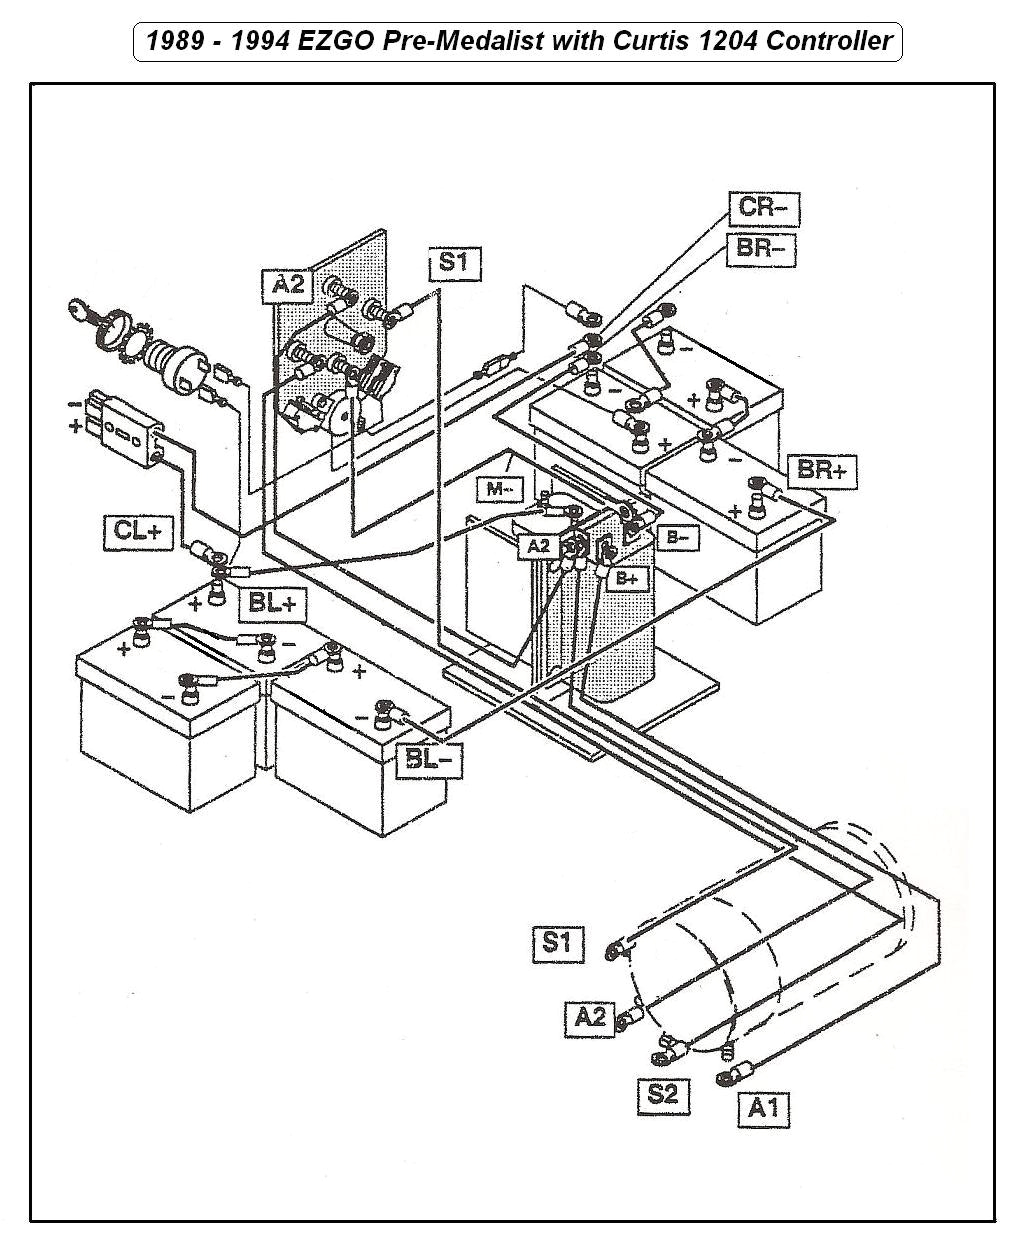 36v ezgo wiring diagram schema diagram database 2000 ezgo 36 volt wiring diagram 36v ezgo wiring diagram